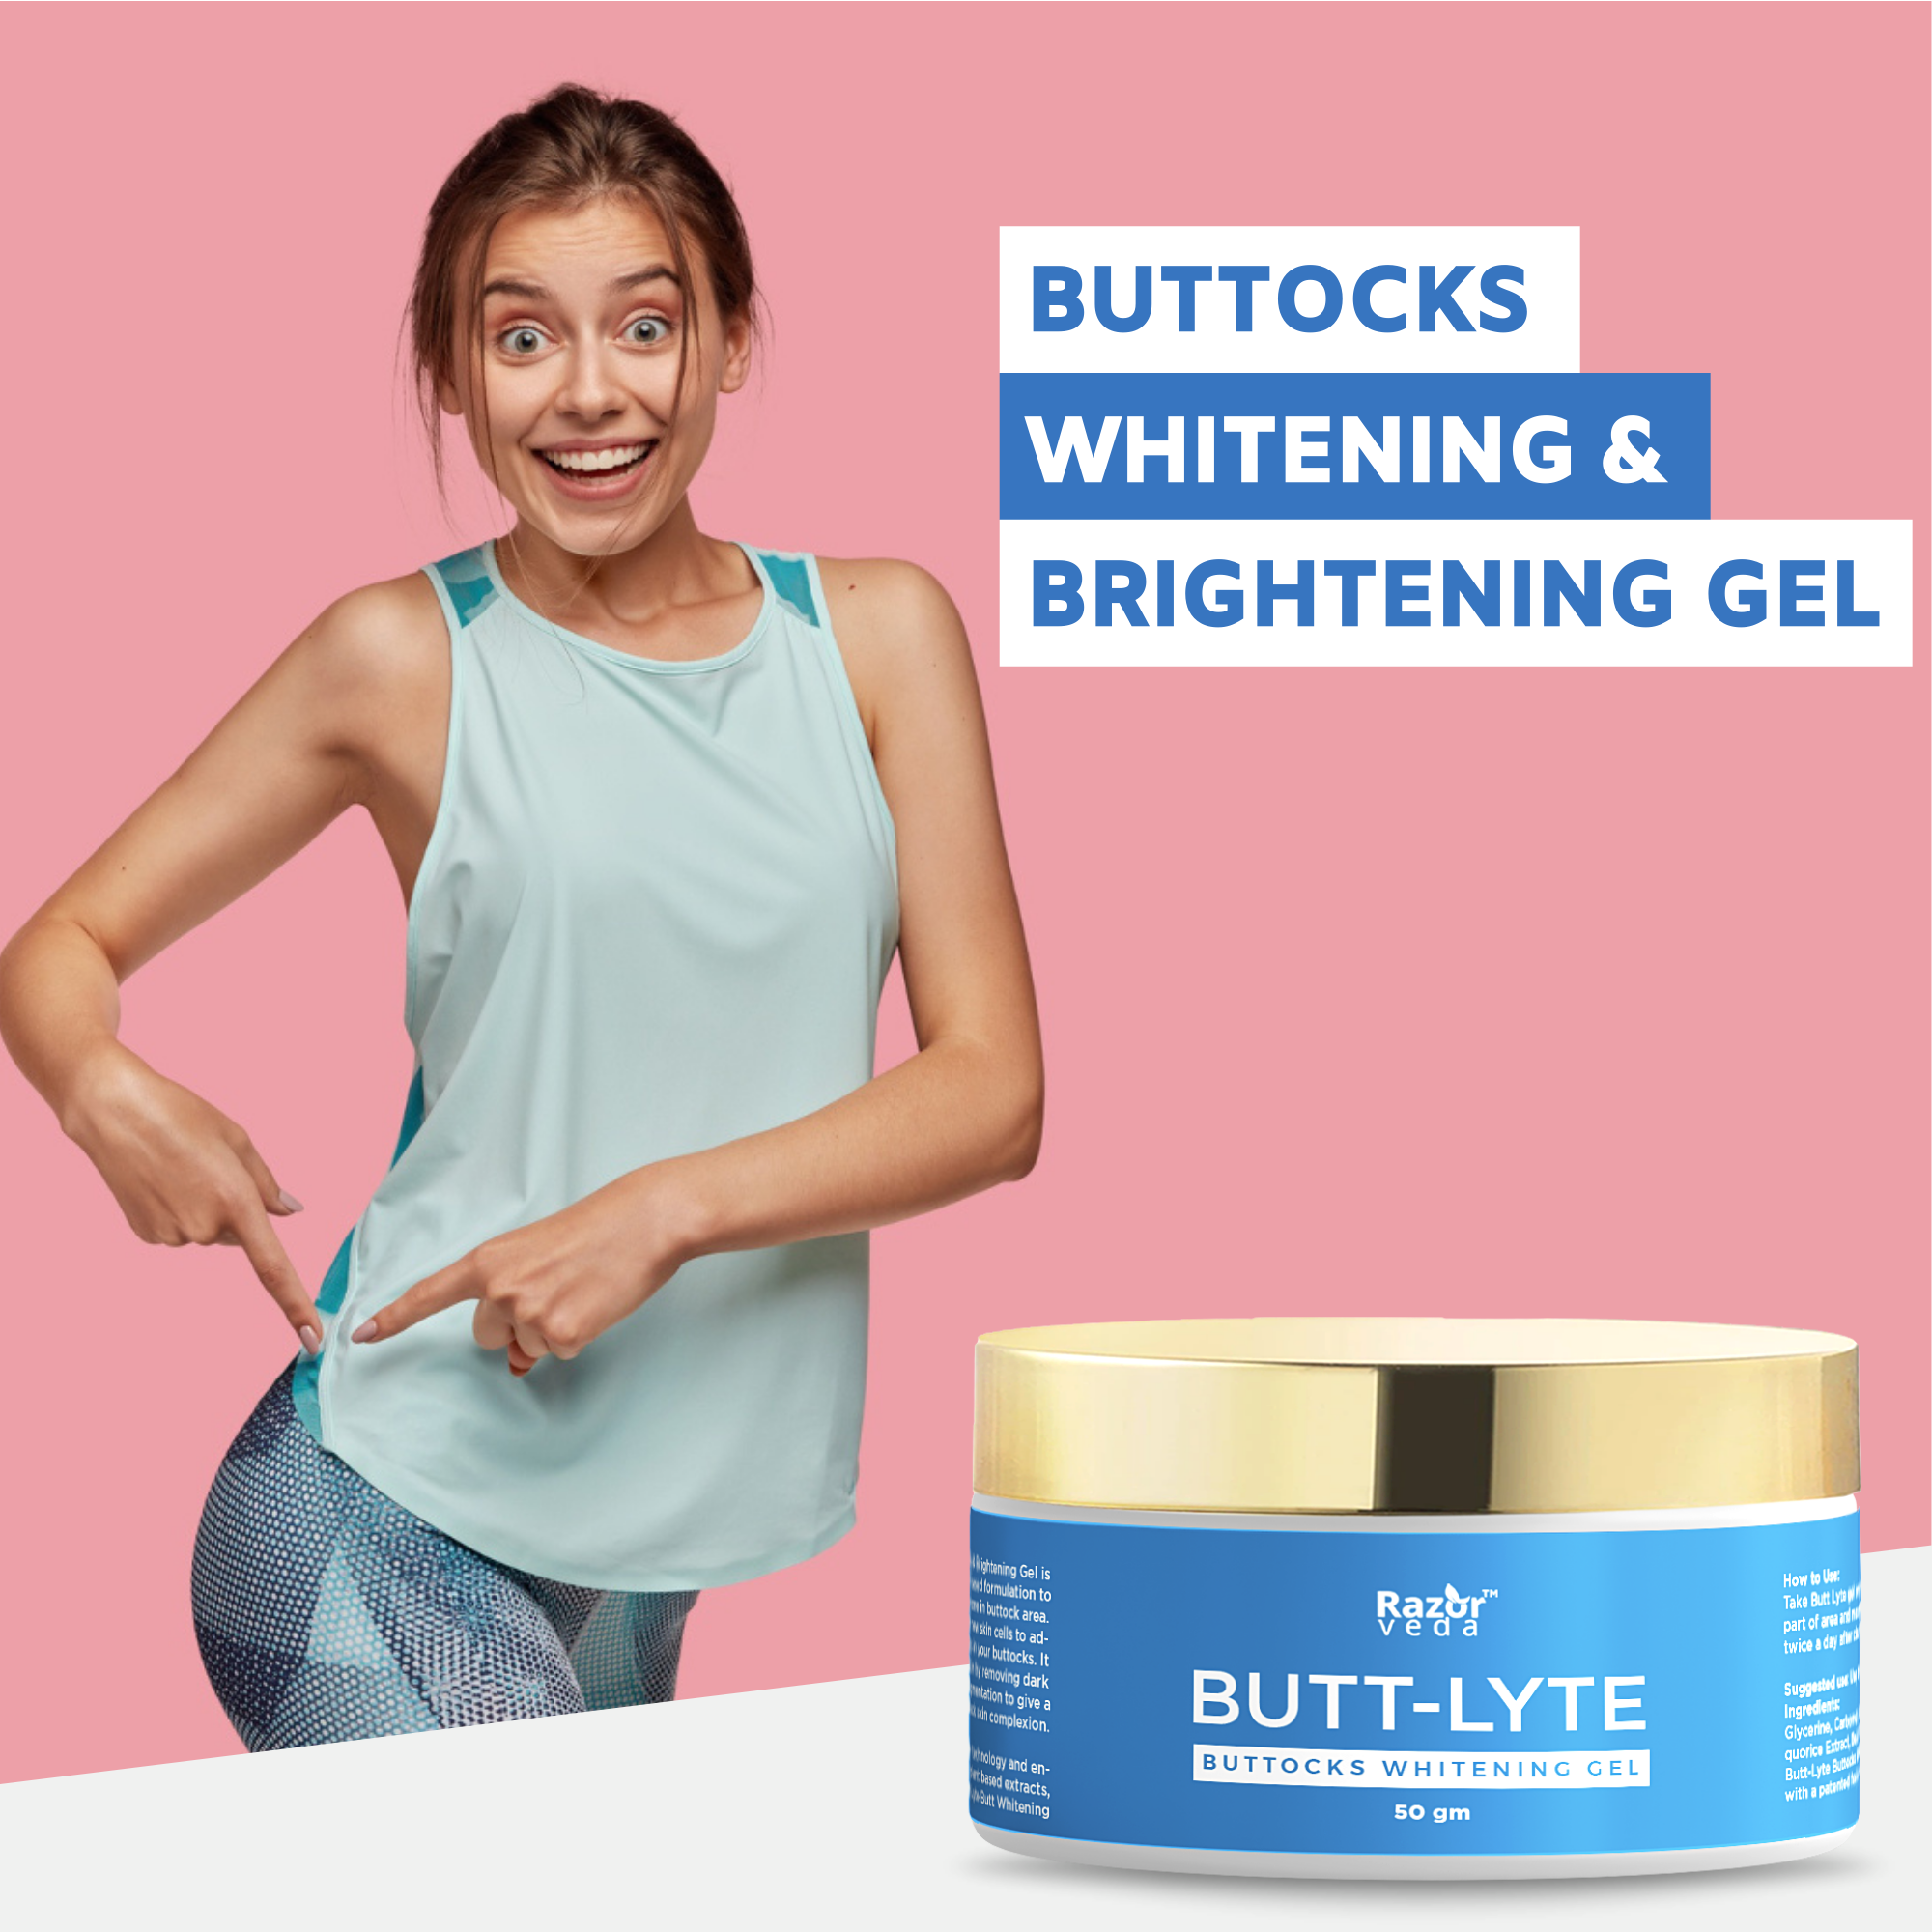 Butt-Lyte Buttock Whitening & Brightening Gel Razorveda